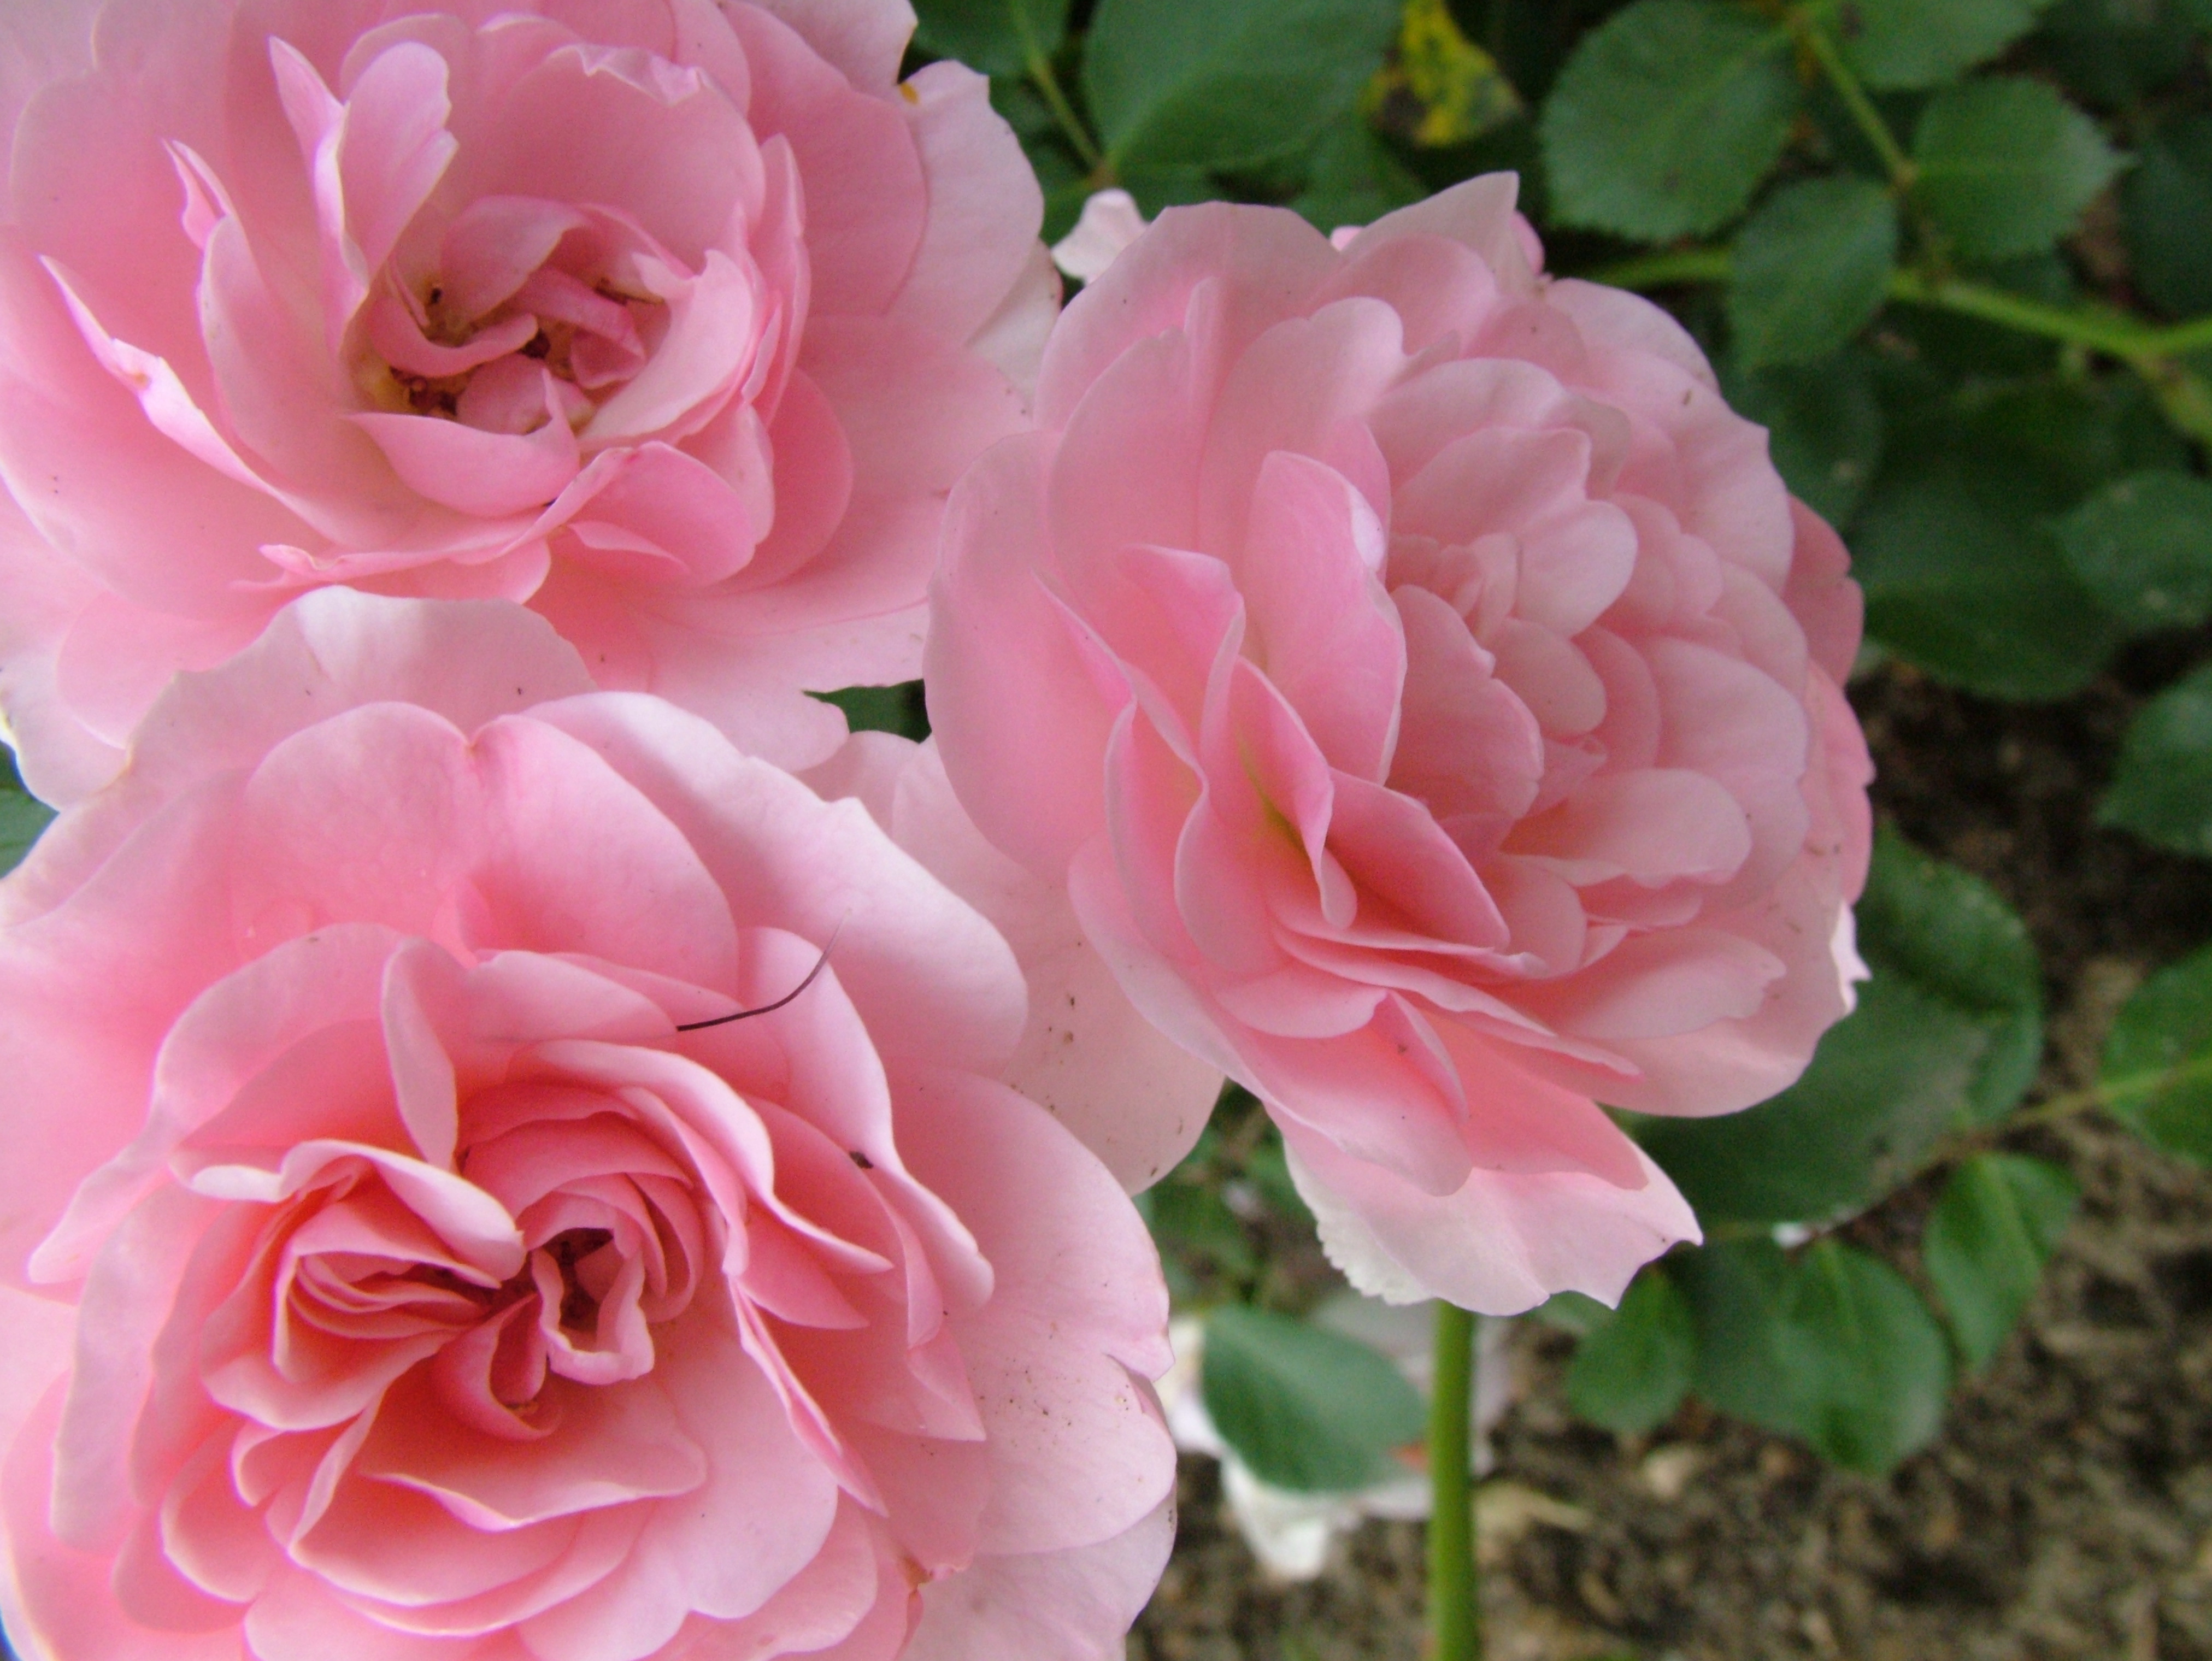 wallpaper rose flowers free download,flower,flowering plant,julia child rose,garden roses,pink